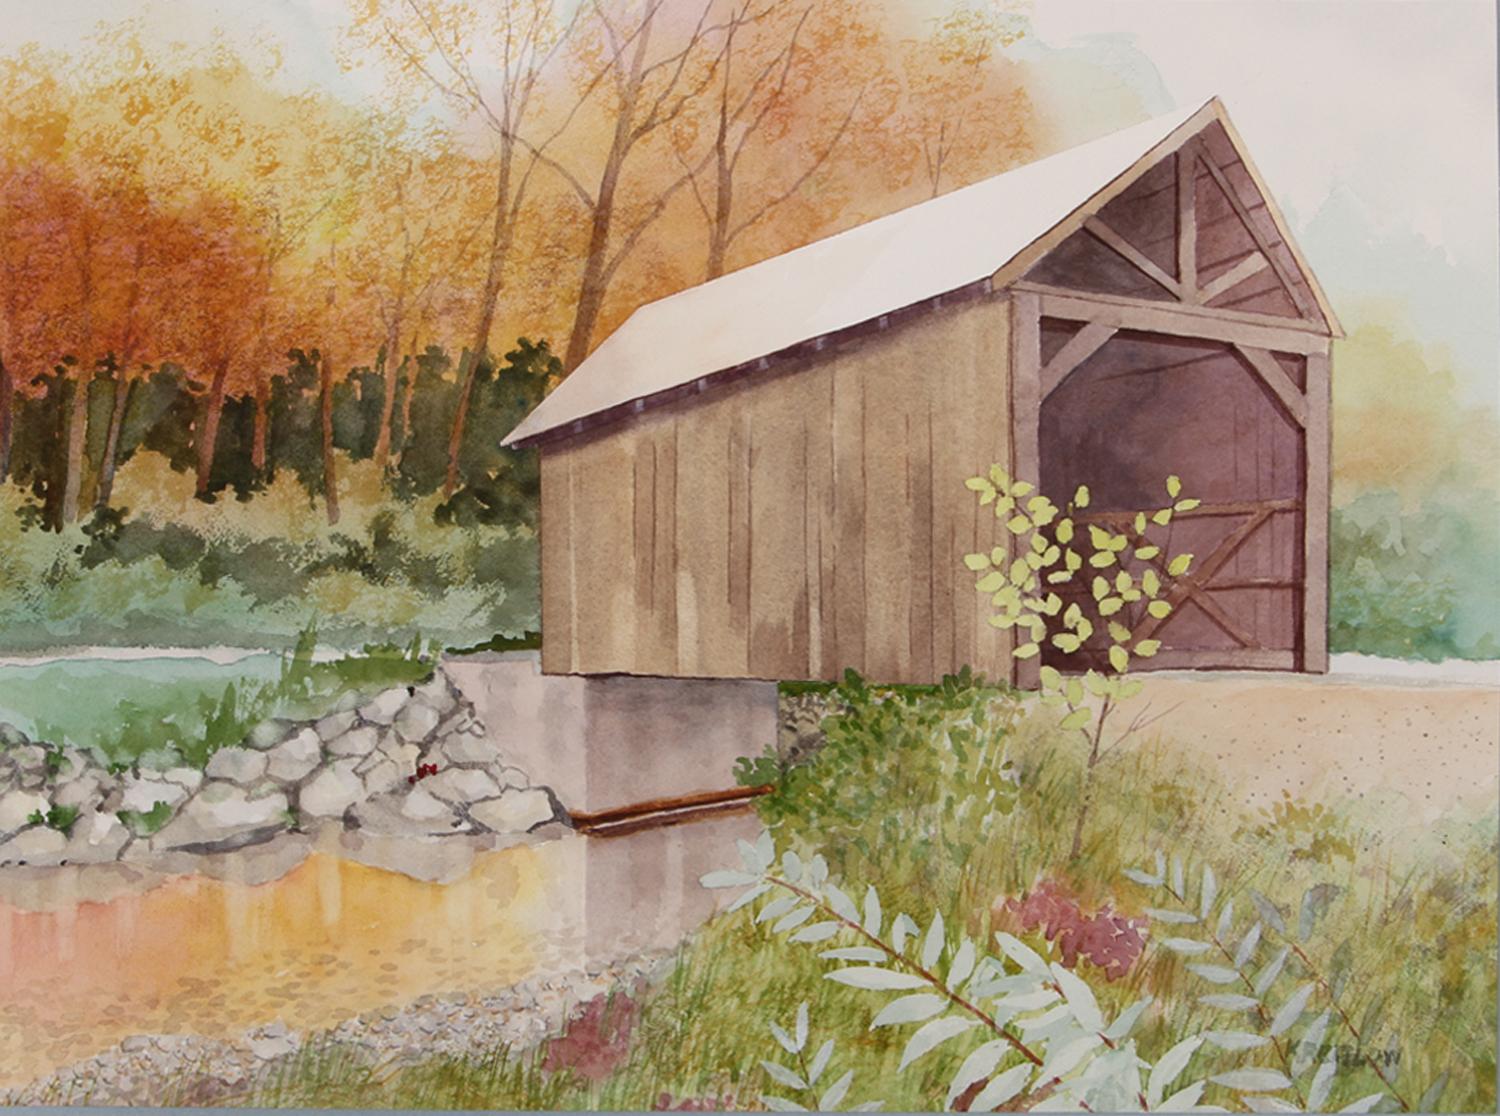 Covered Bridge Over White River, Original Painting